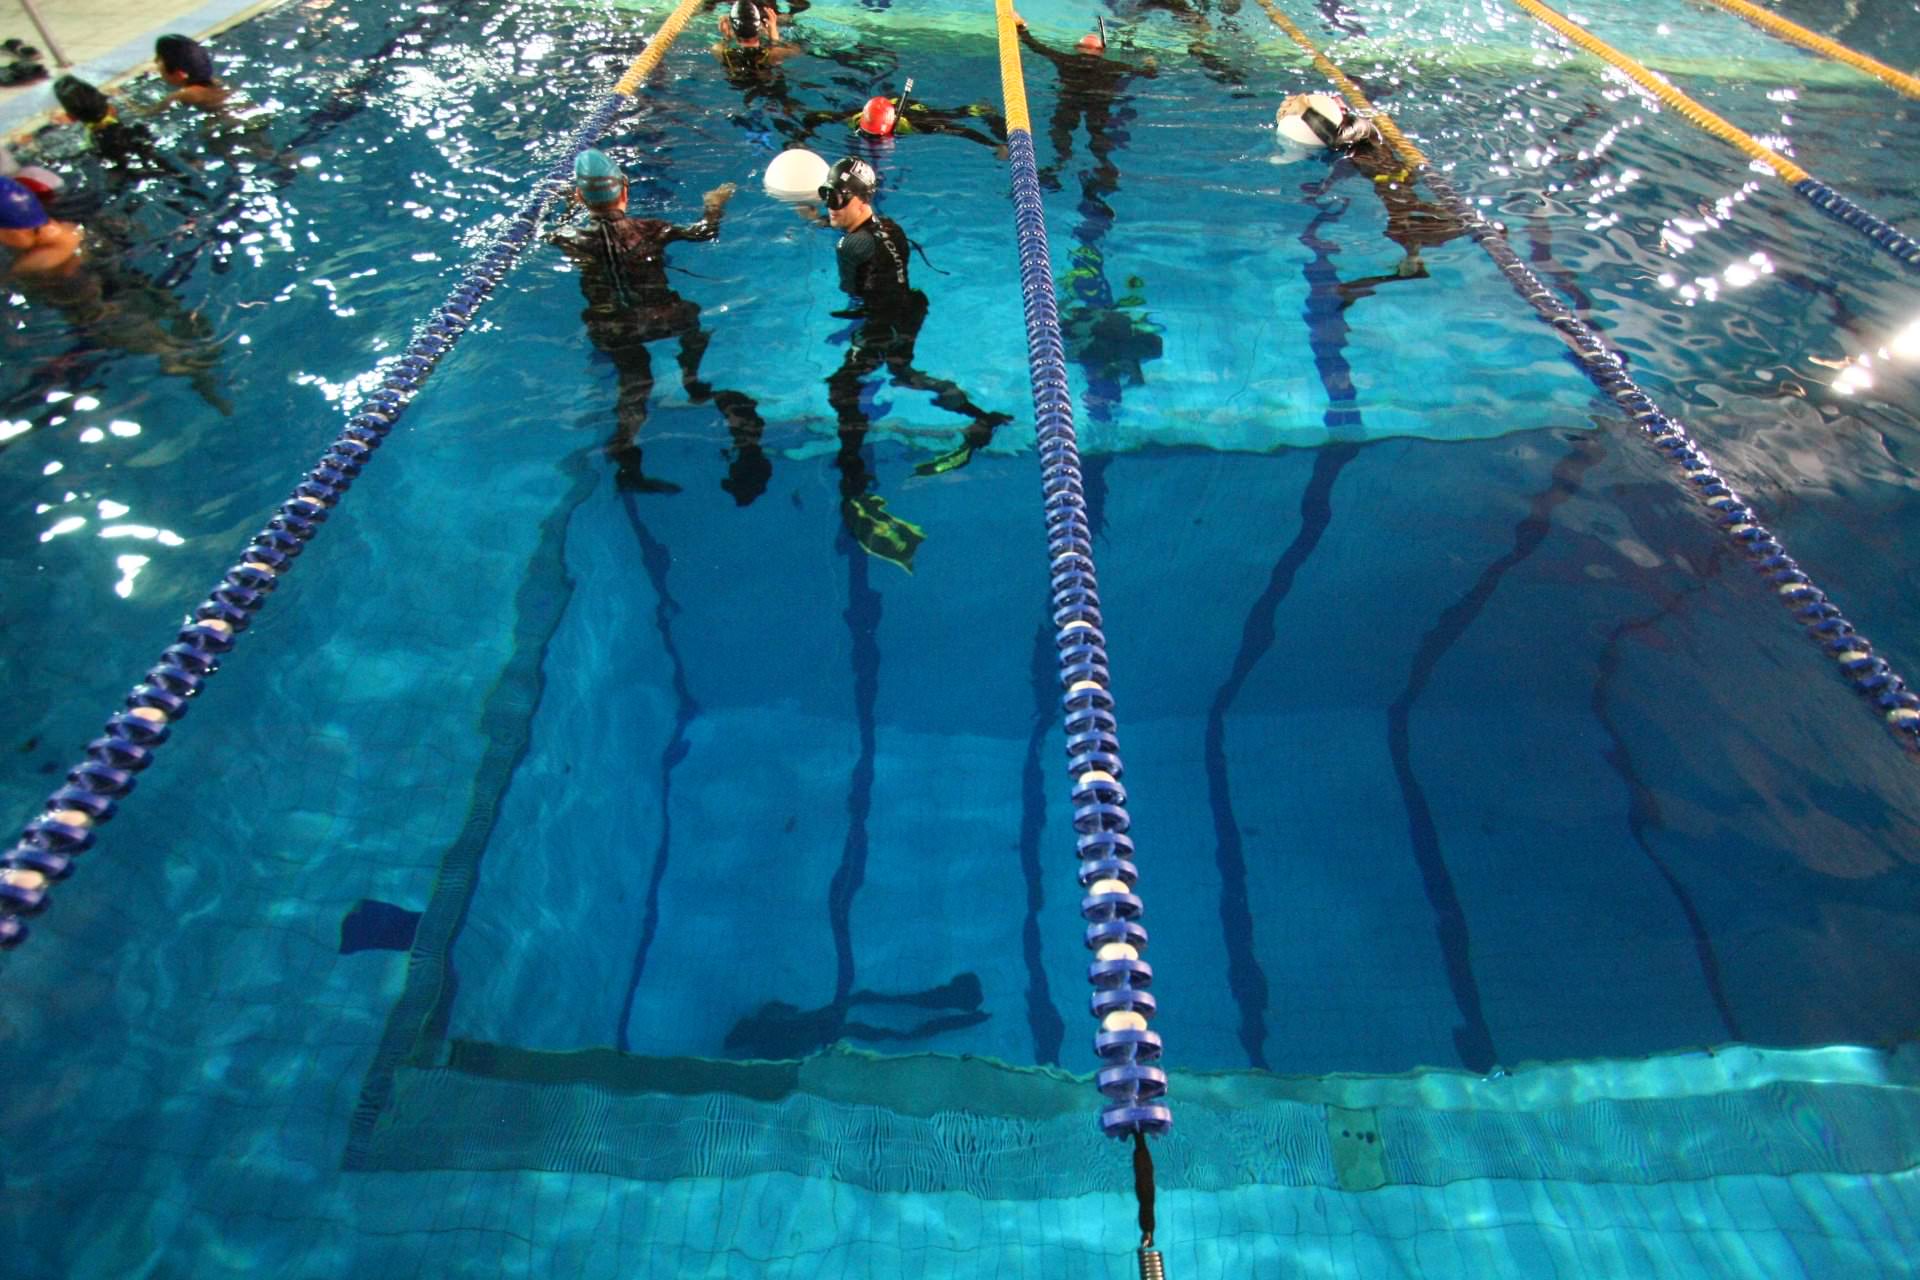 Piscina Sport Club Venaria profonda 10 metri